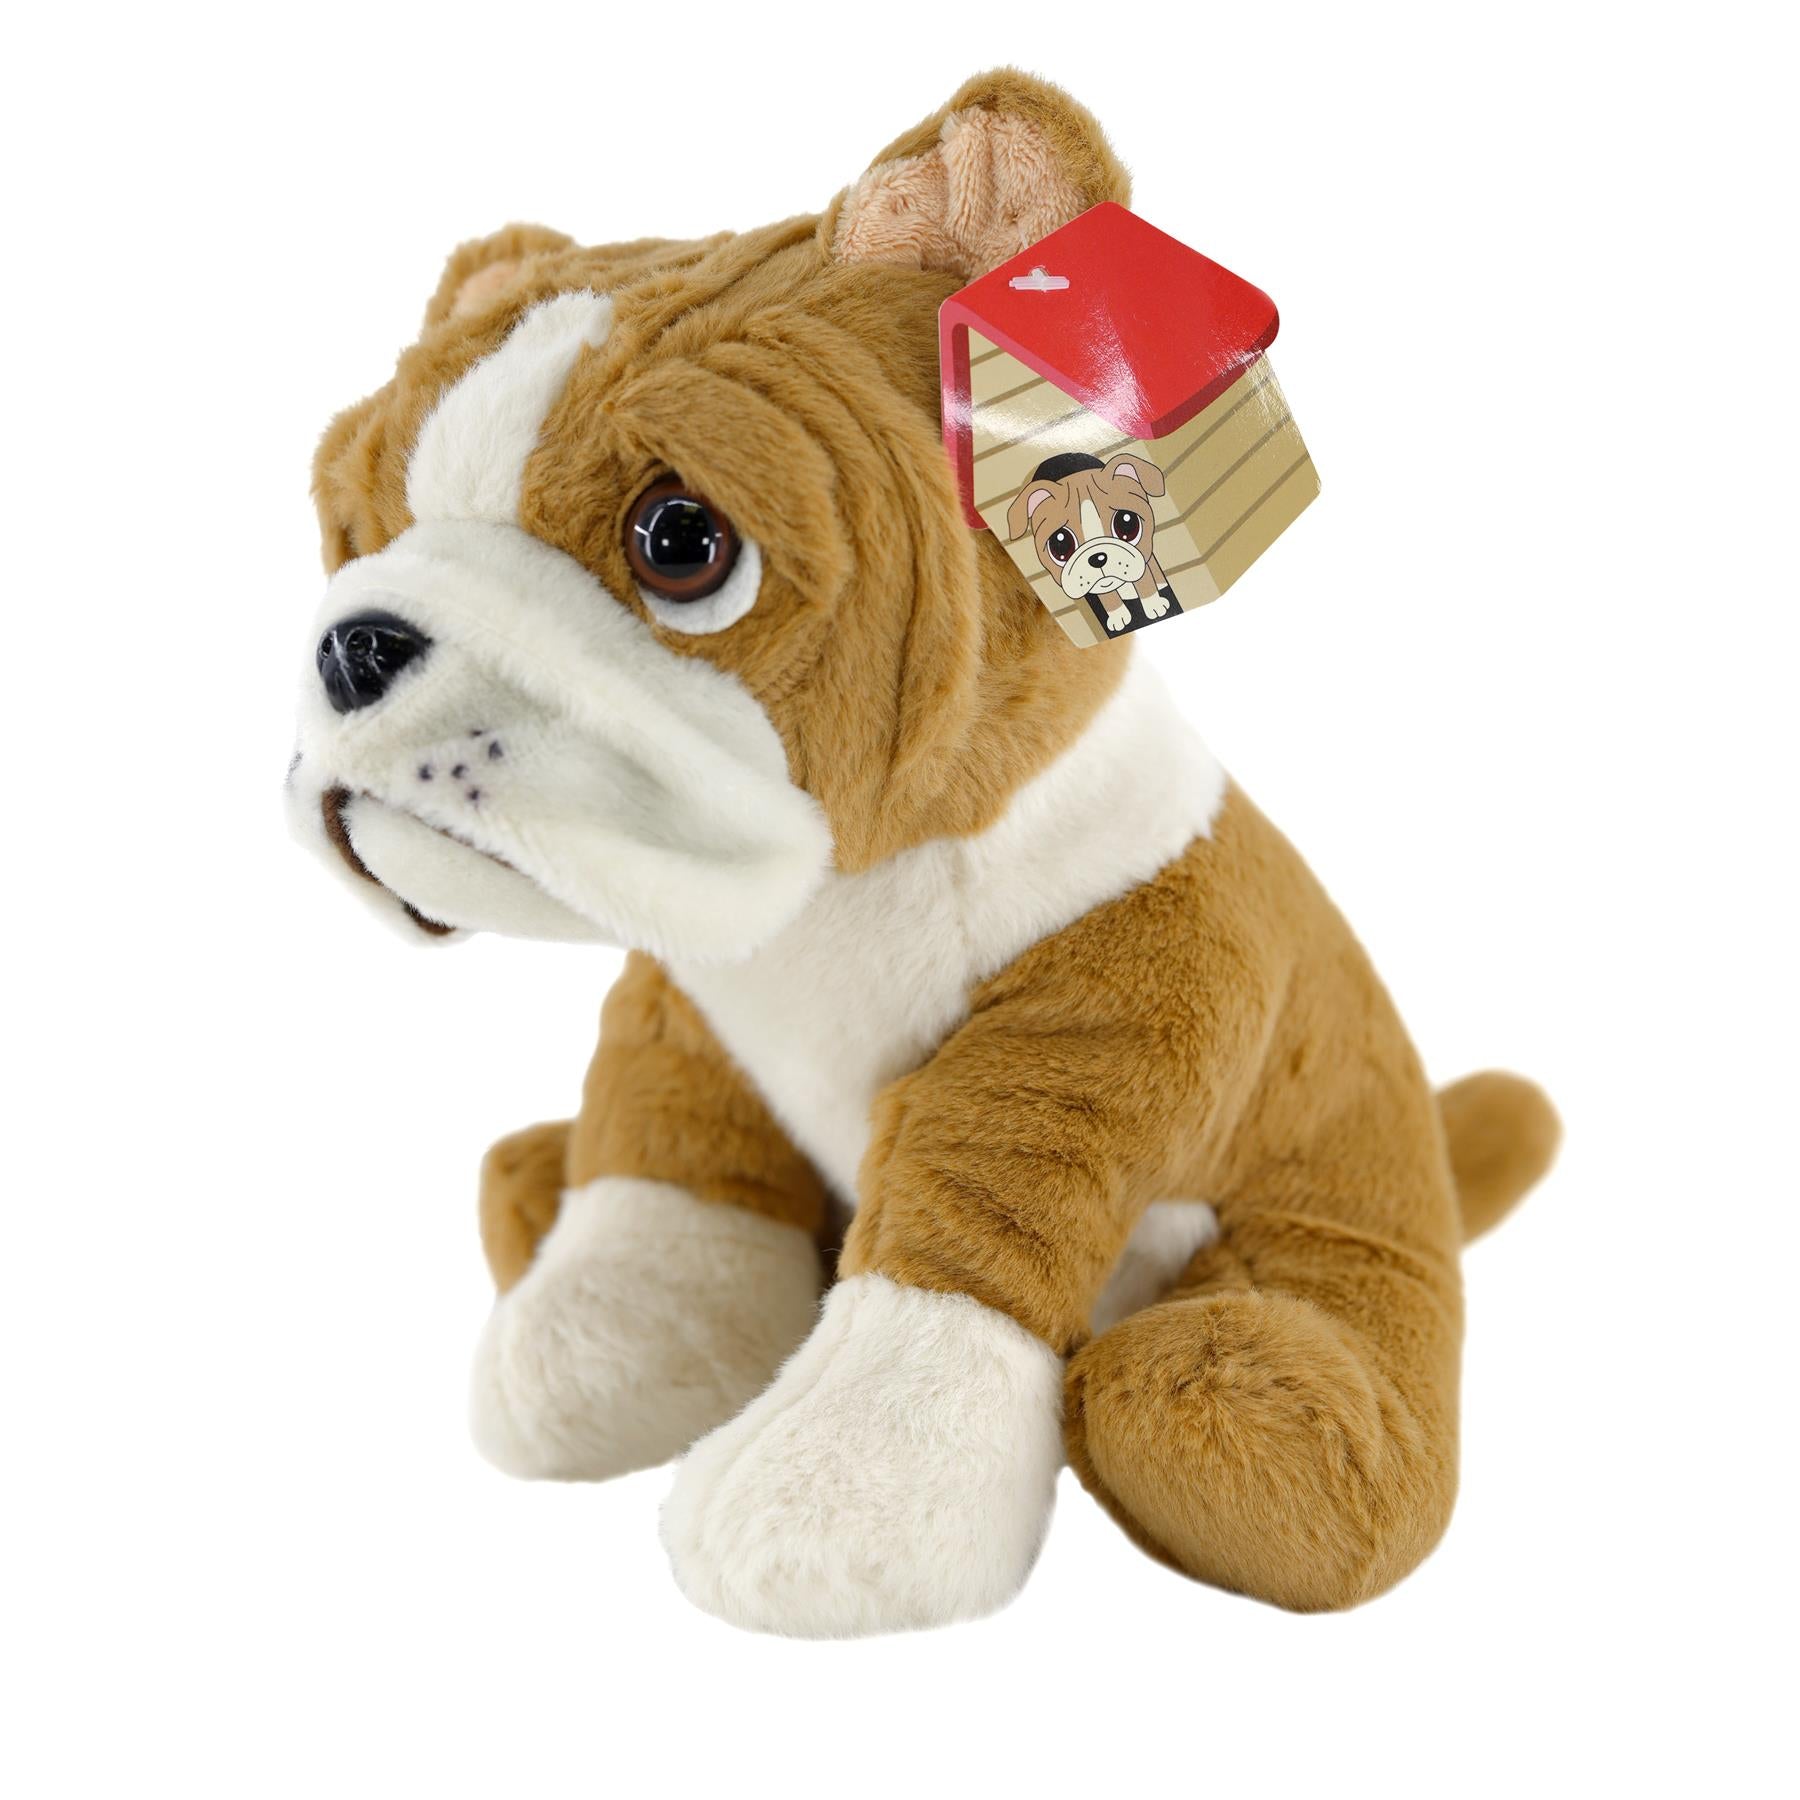 The Magic Toy Shop toyfigure Small Sitting English Bulldog Soft Toy